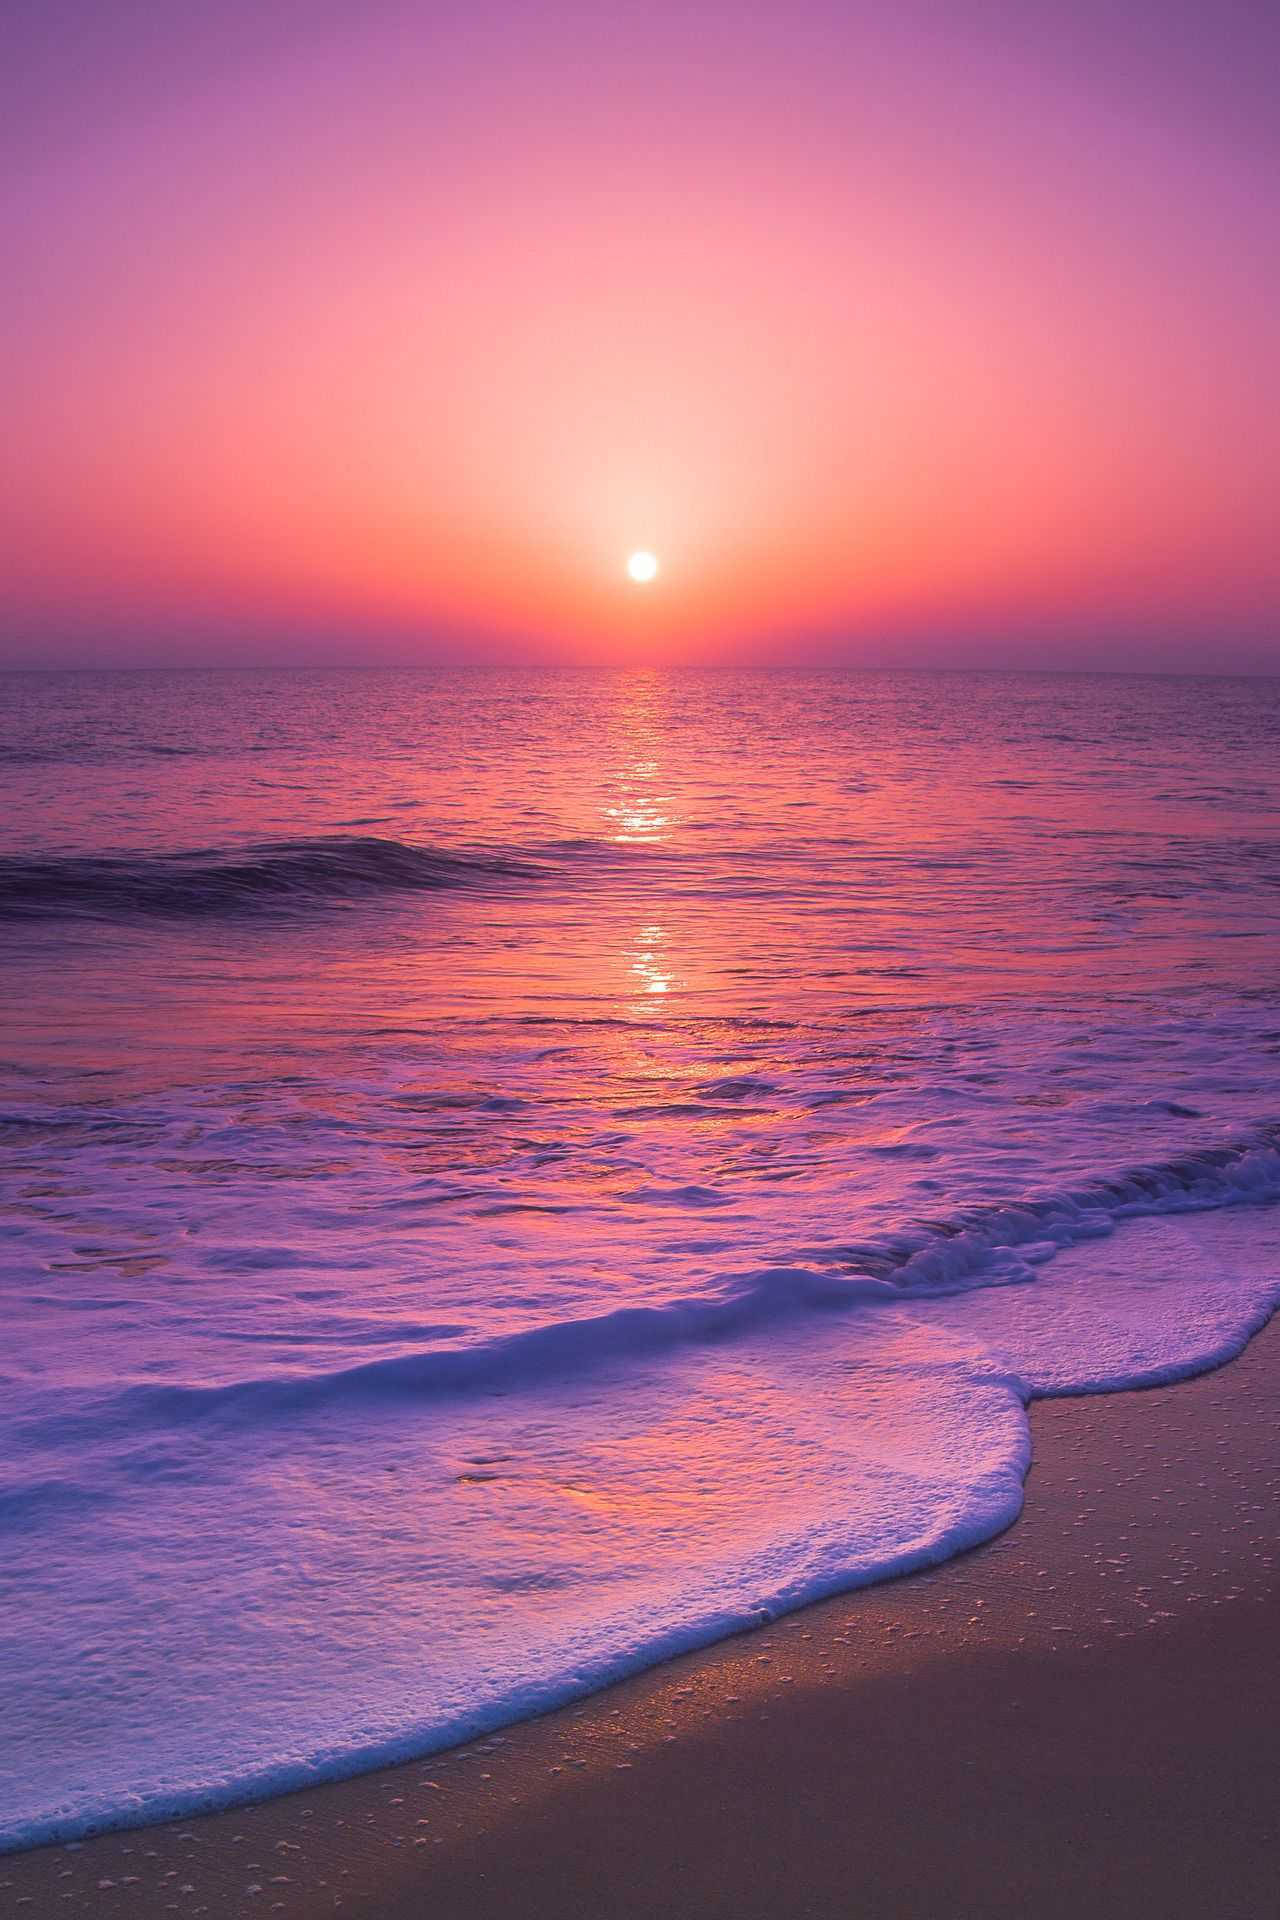 pink sunset iphone wallpaper